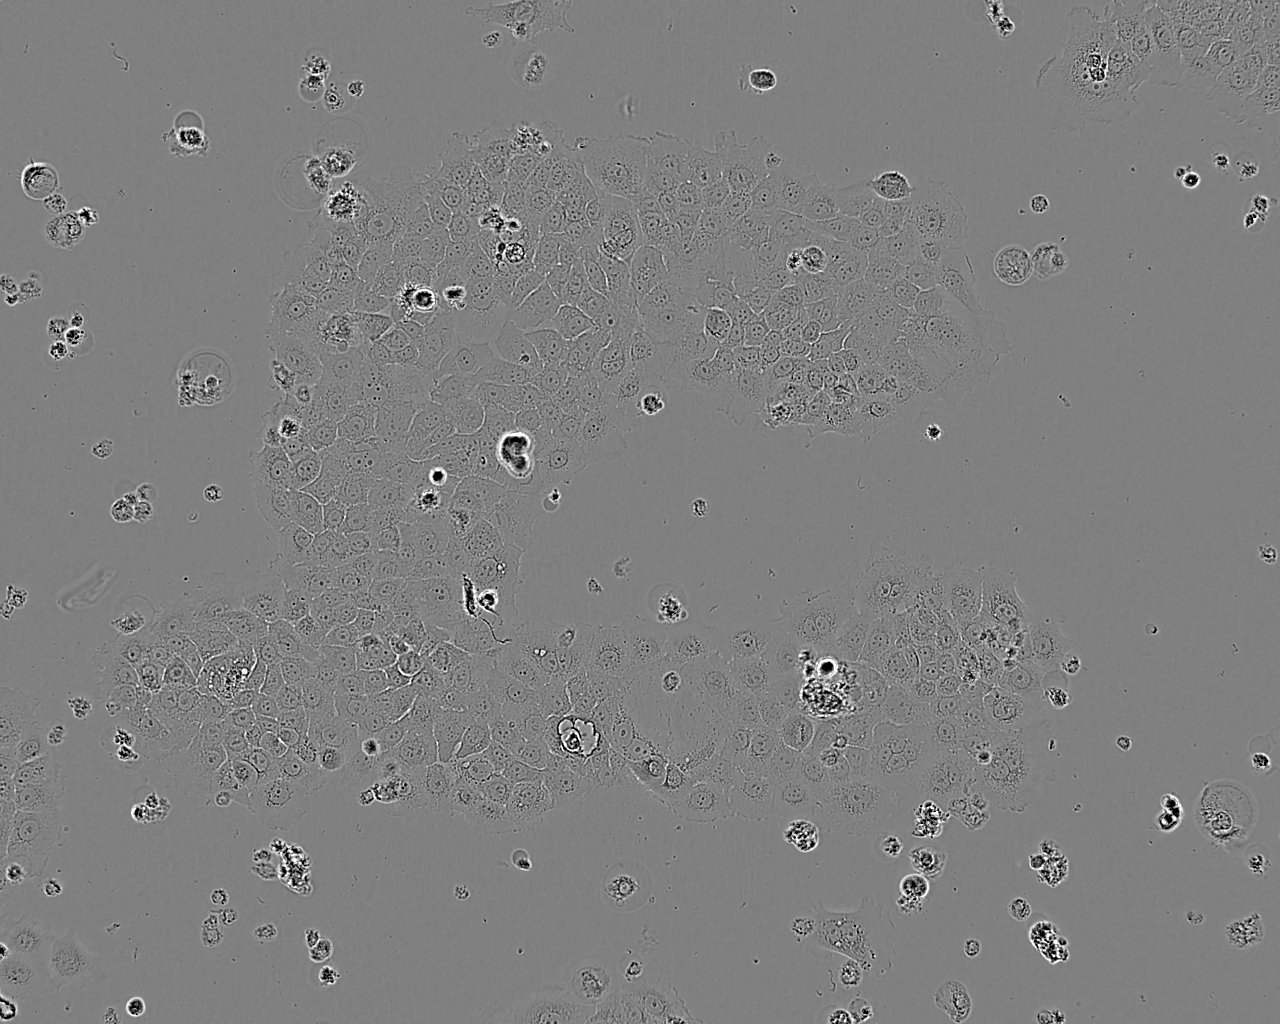 RMC-1 epithelioid cells大鼠视网膜Muller细胞系,RMC-1 epithelioid cells